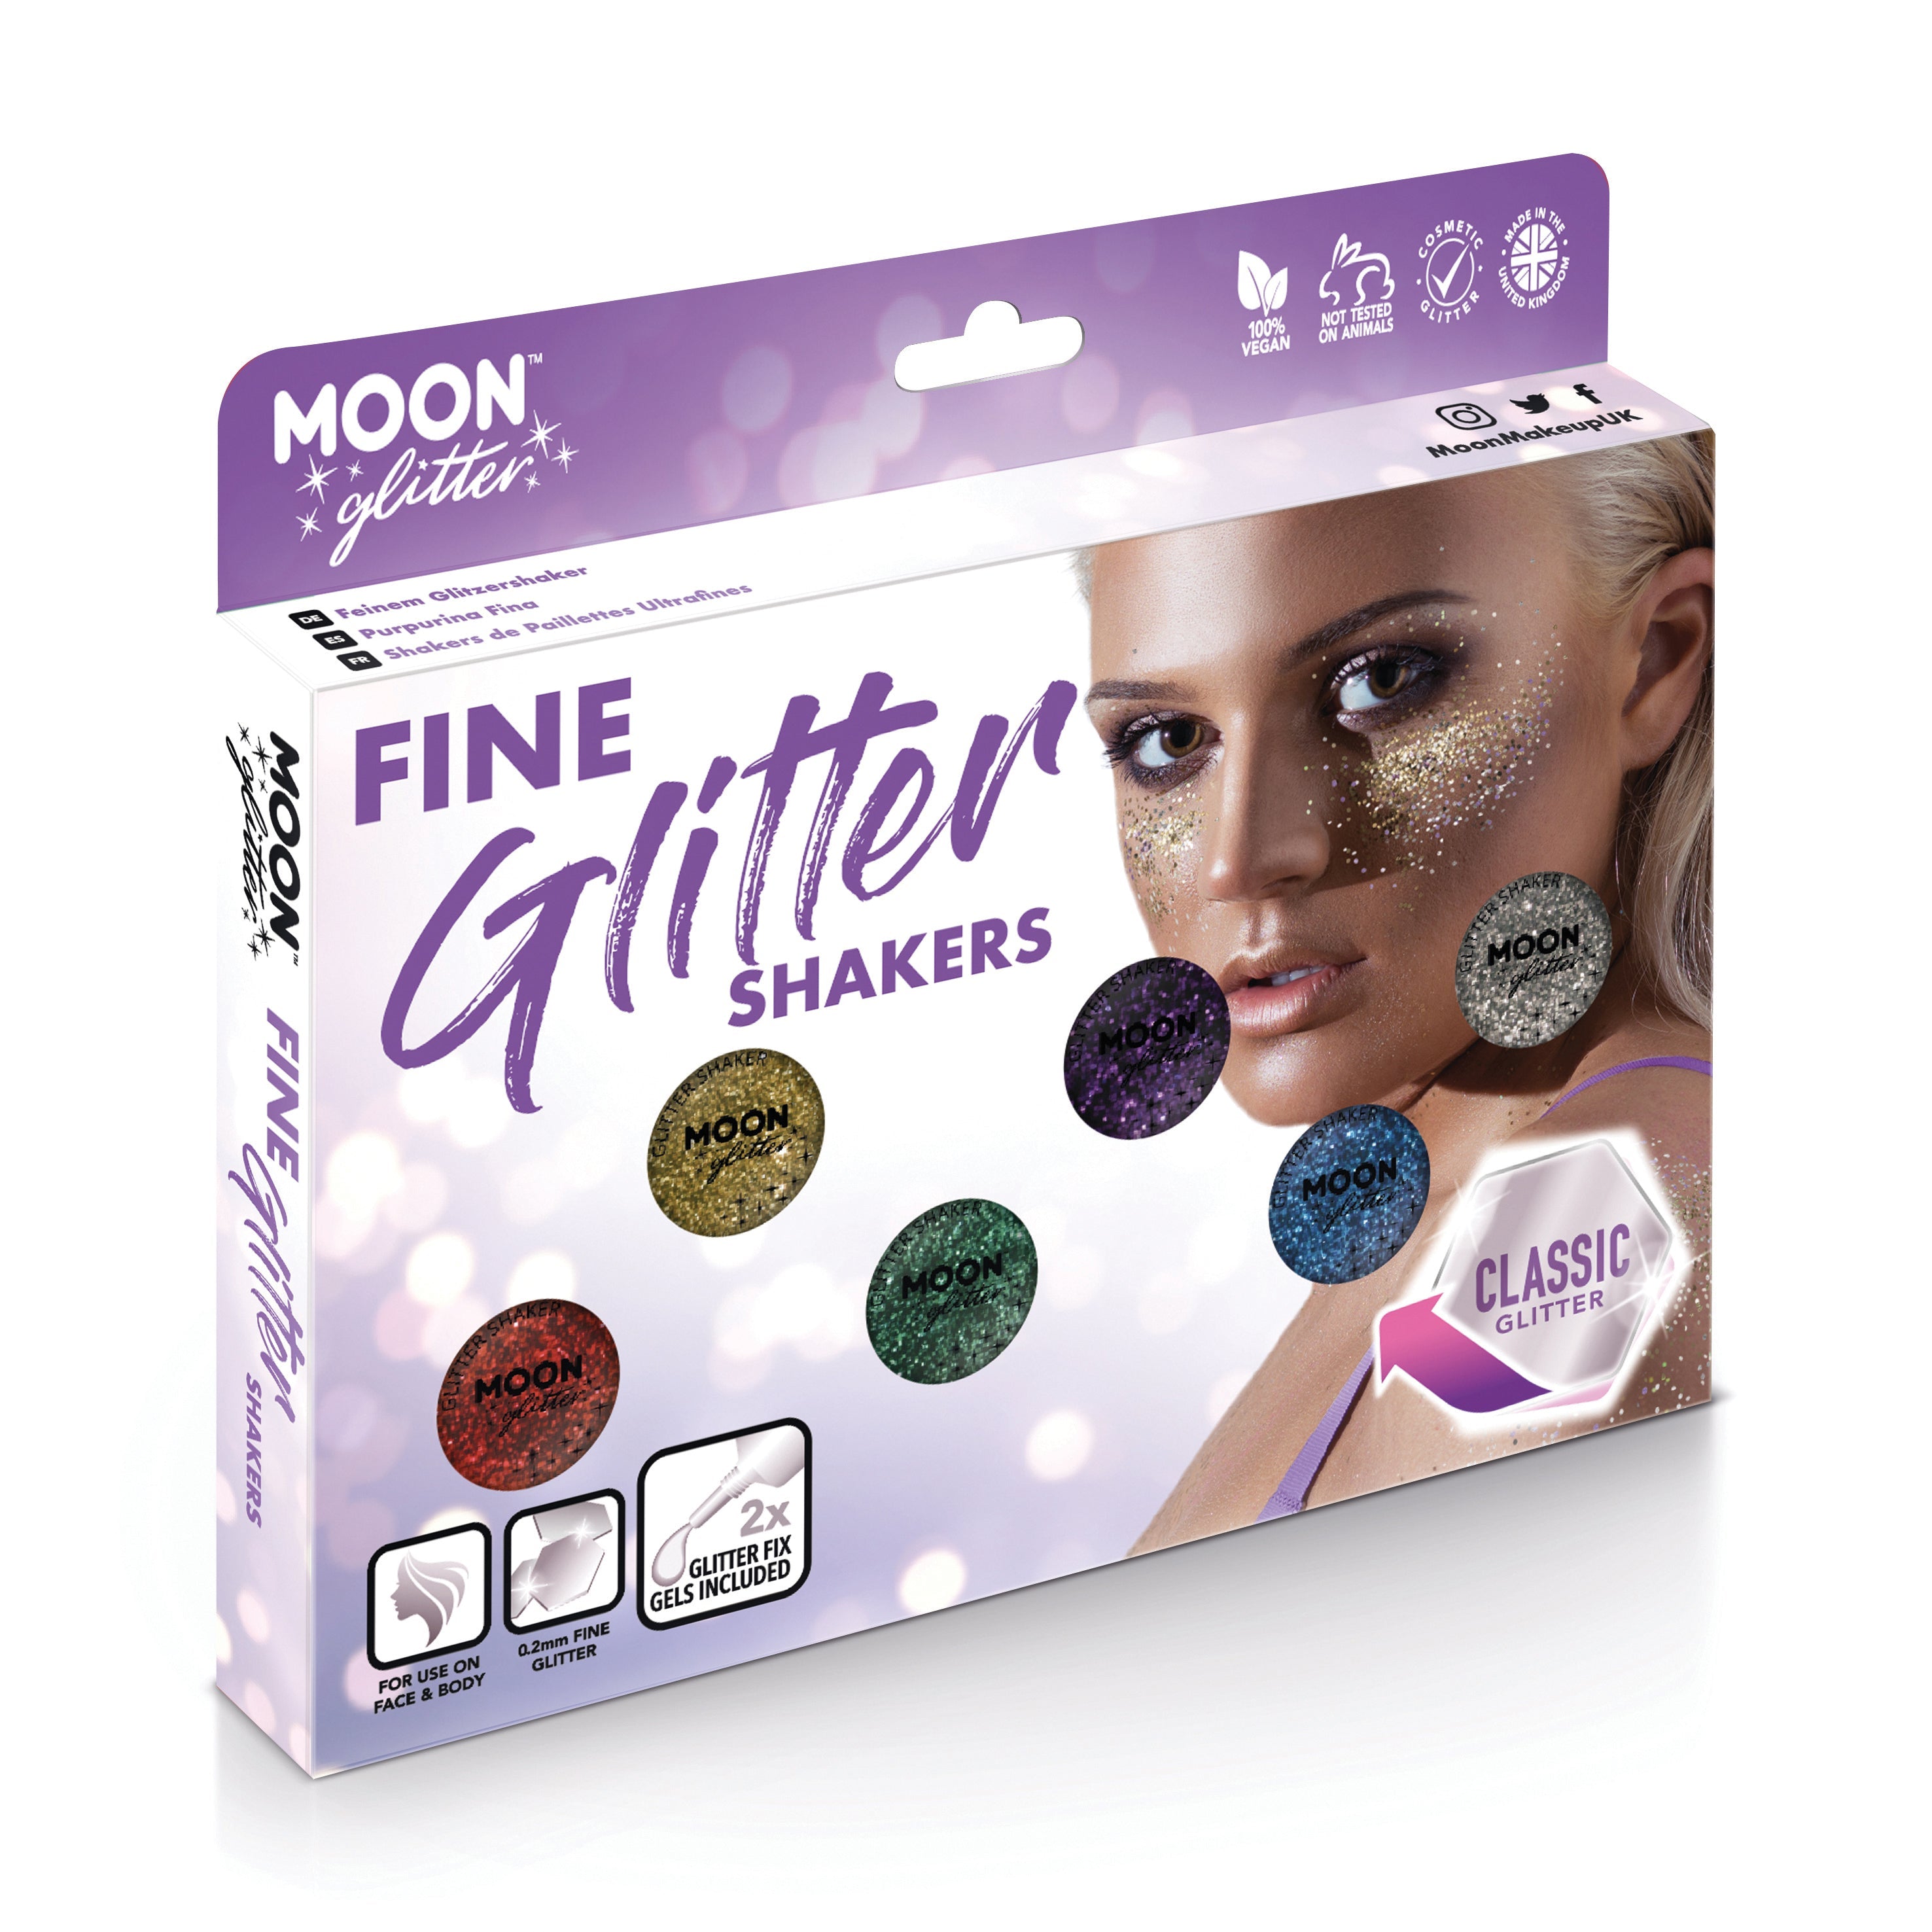 Classic Fine Face & Body Glitter Shaker Boxset - 6 Shakers, 2 Fix Gel. Cosmetically certified, FDA & Health Canada compliant, cruelty free and vegan.